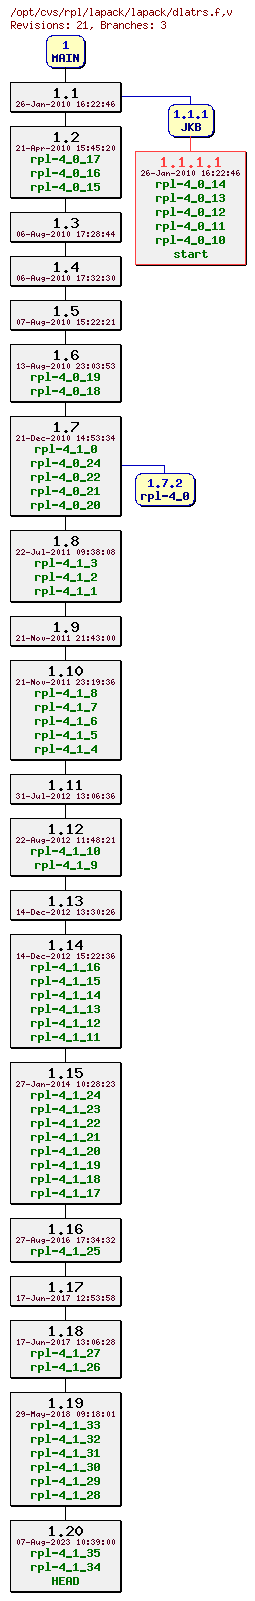 Revision graph of rpl/lapack/lapack/dlatrs.f